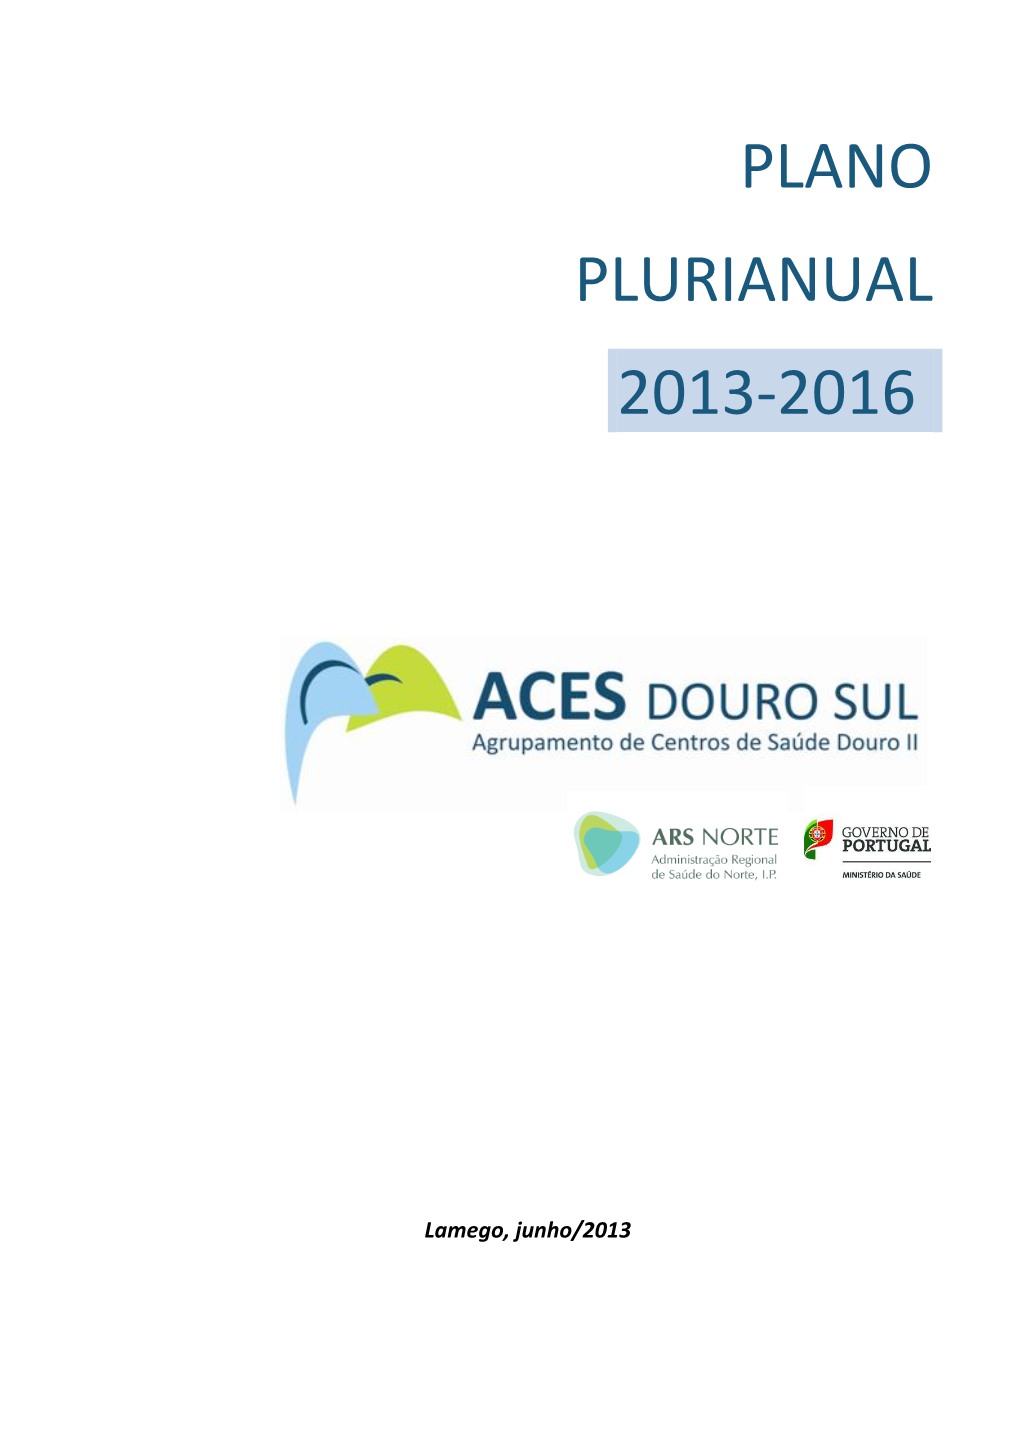 Plano Plurianual 2013-2016